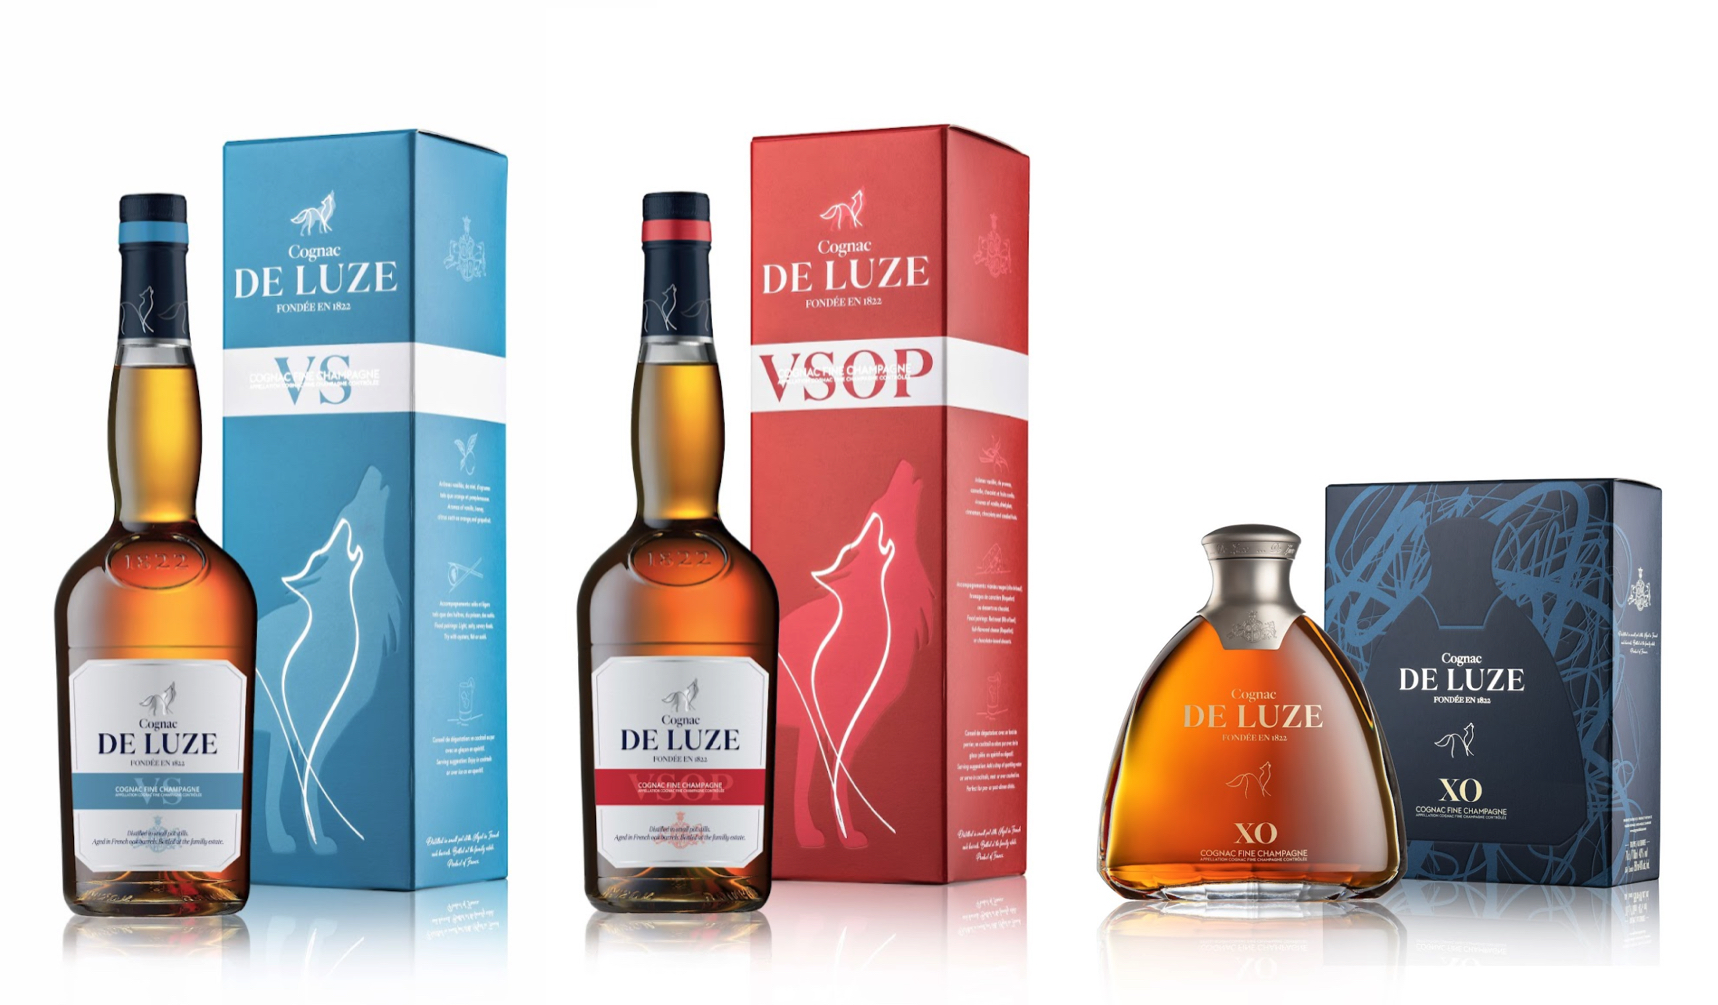 Cognac De Luze: Markenrelaunch nach 200 Jahren